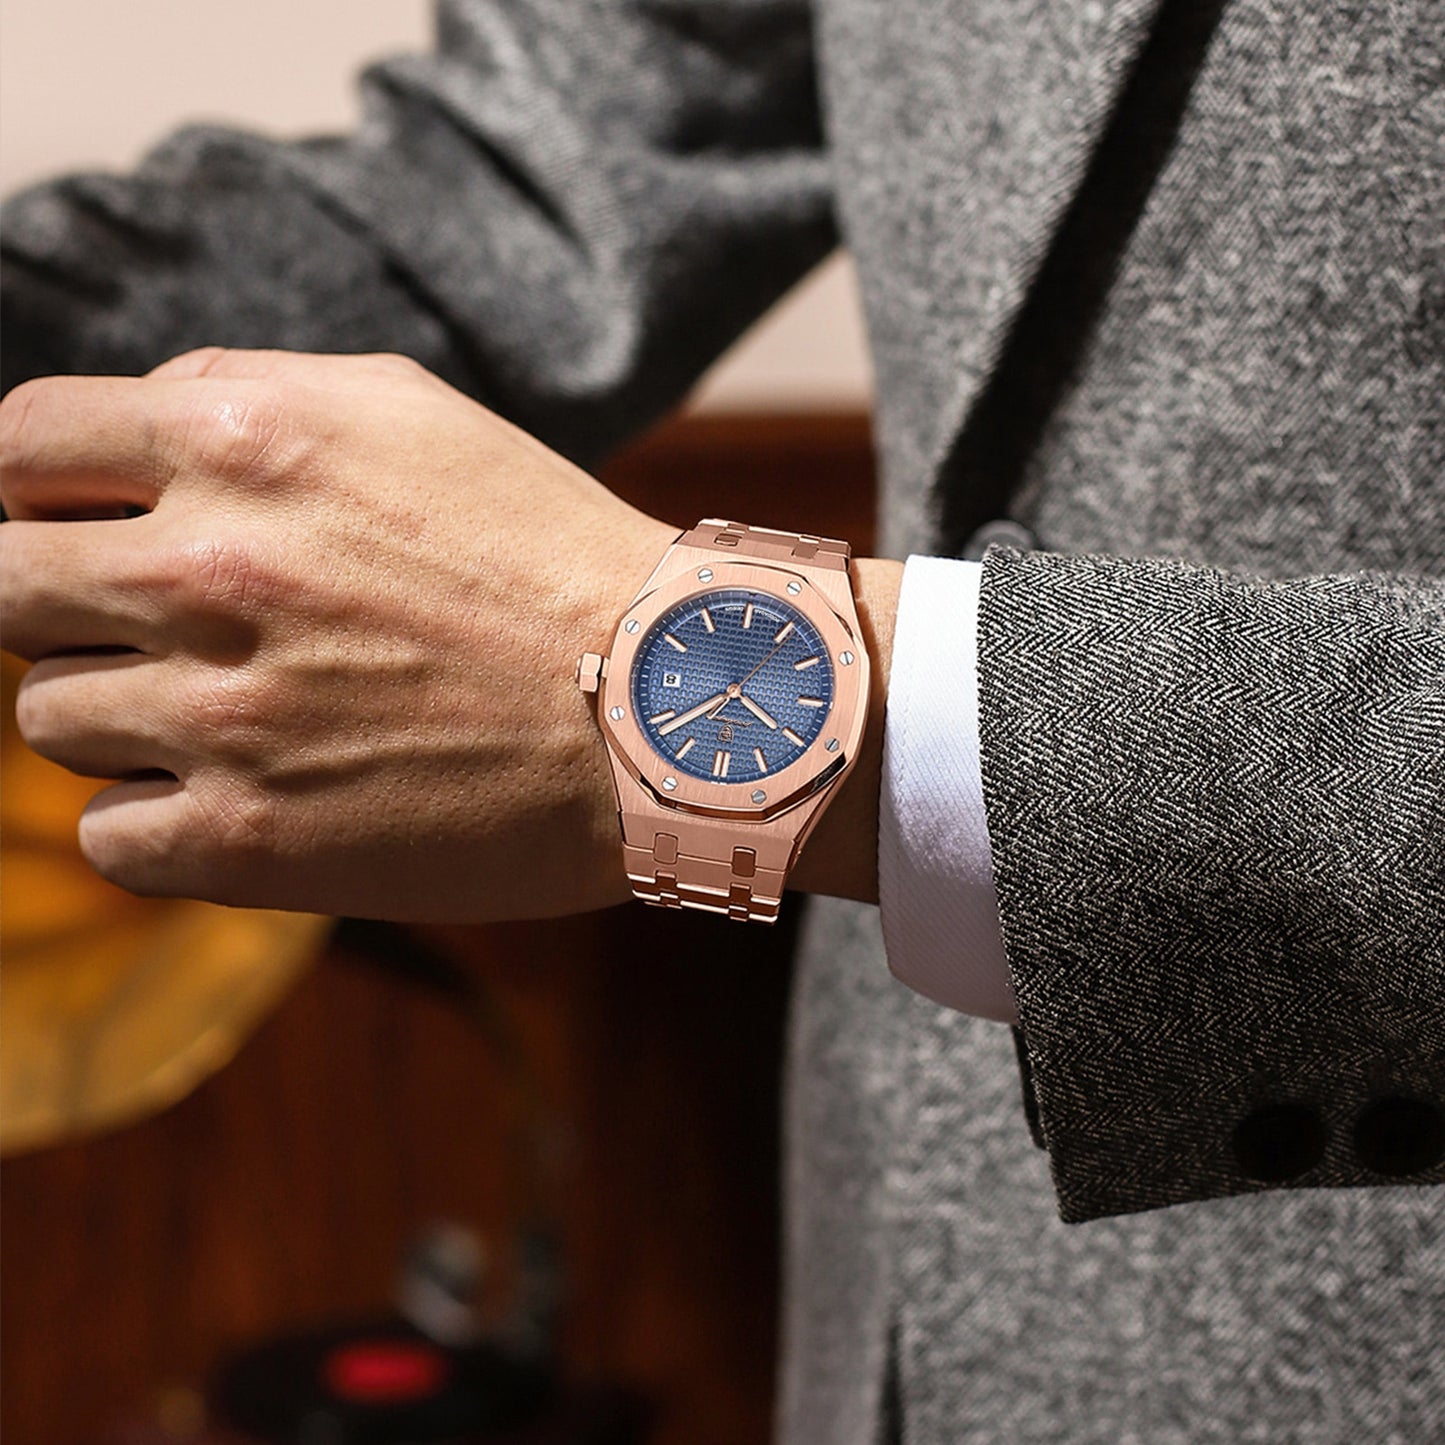 Classic Mens Luxury Quartz Wristwatch: POEDAGAR